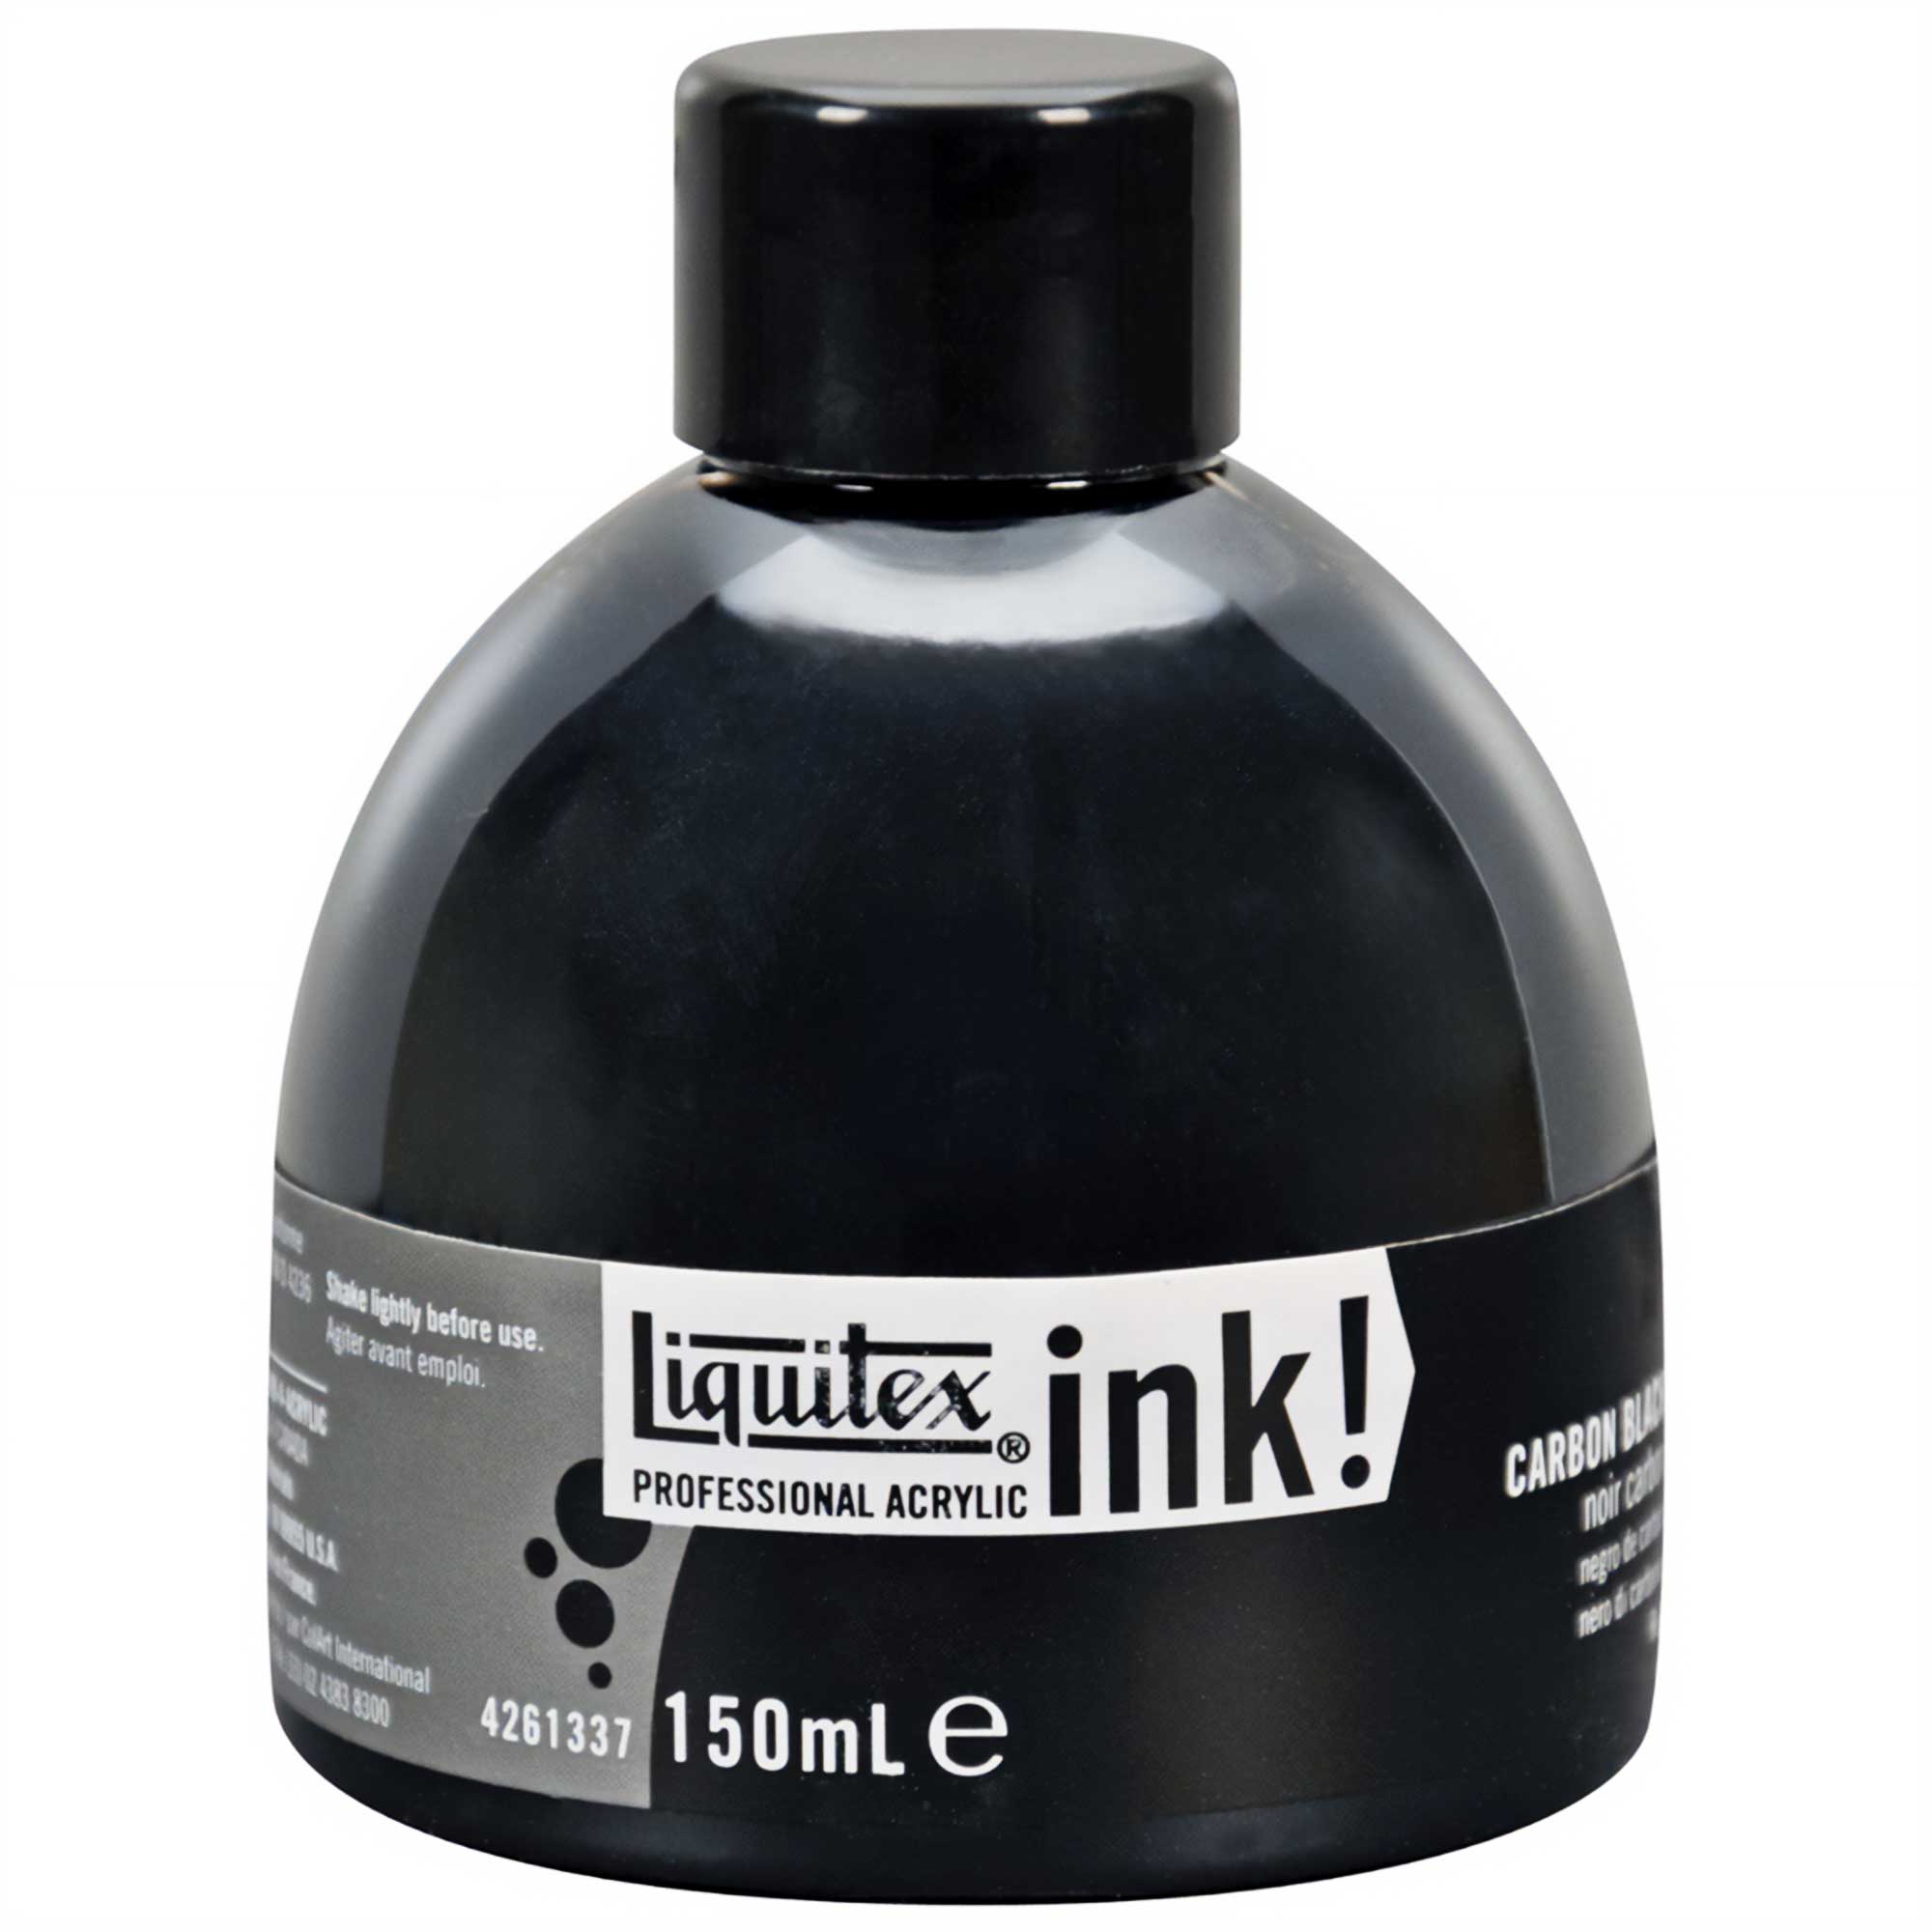 Liquitex Professional Acrylic Carbon Black Ink - 150ml